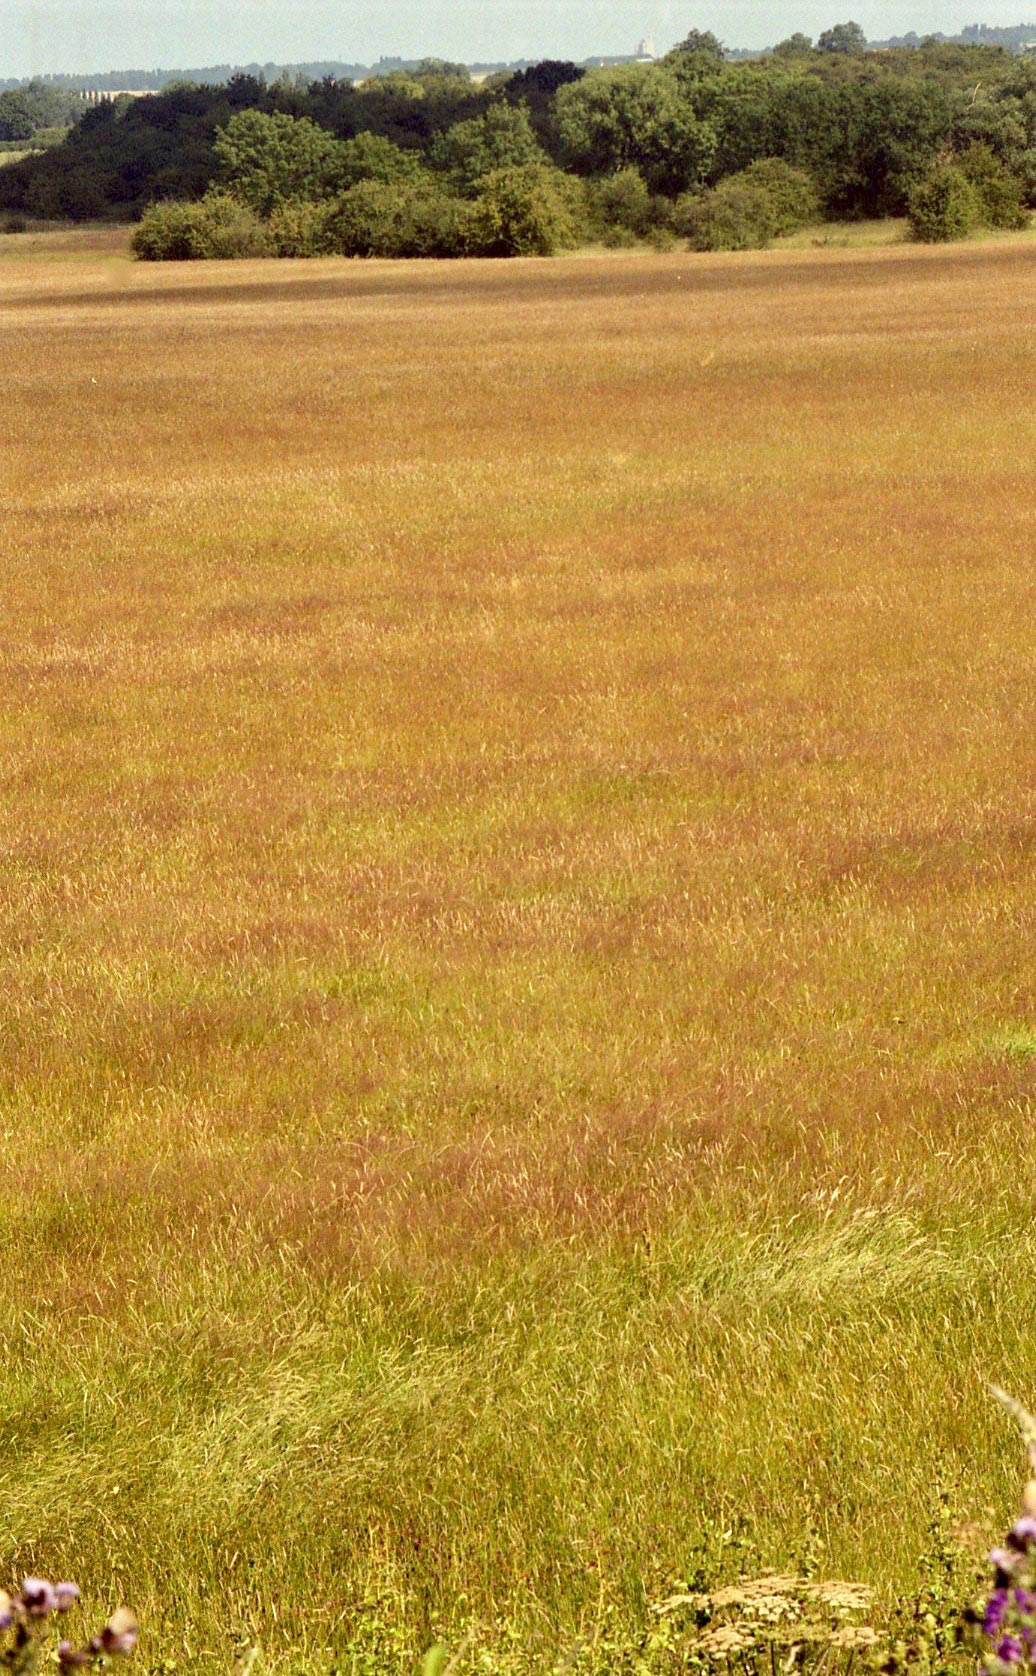 Grass in landscape 7.03